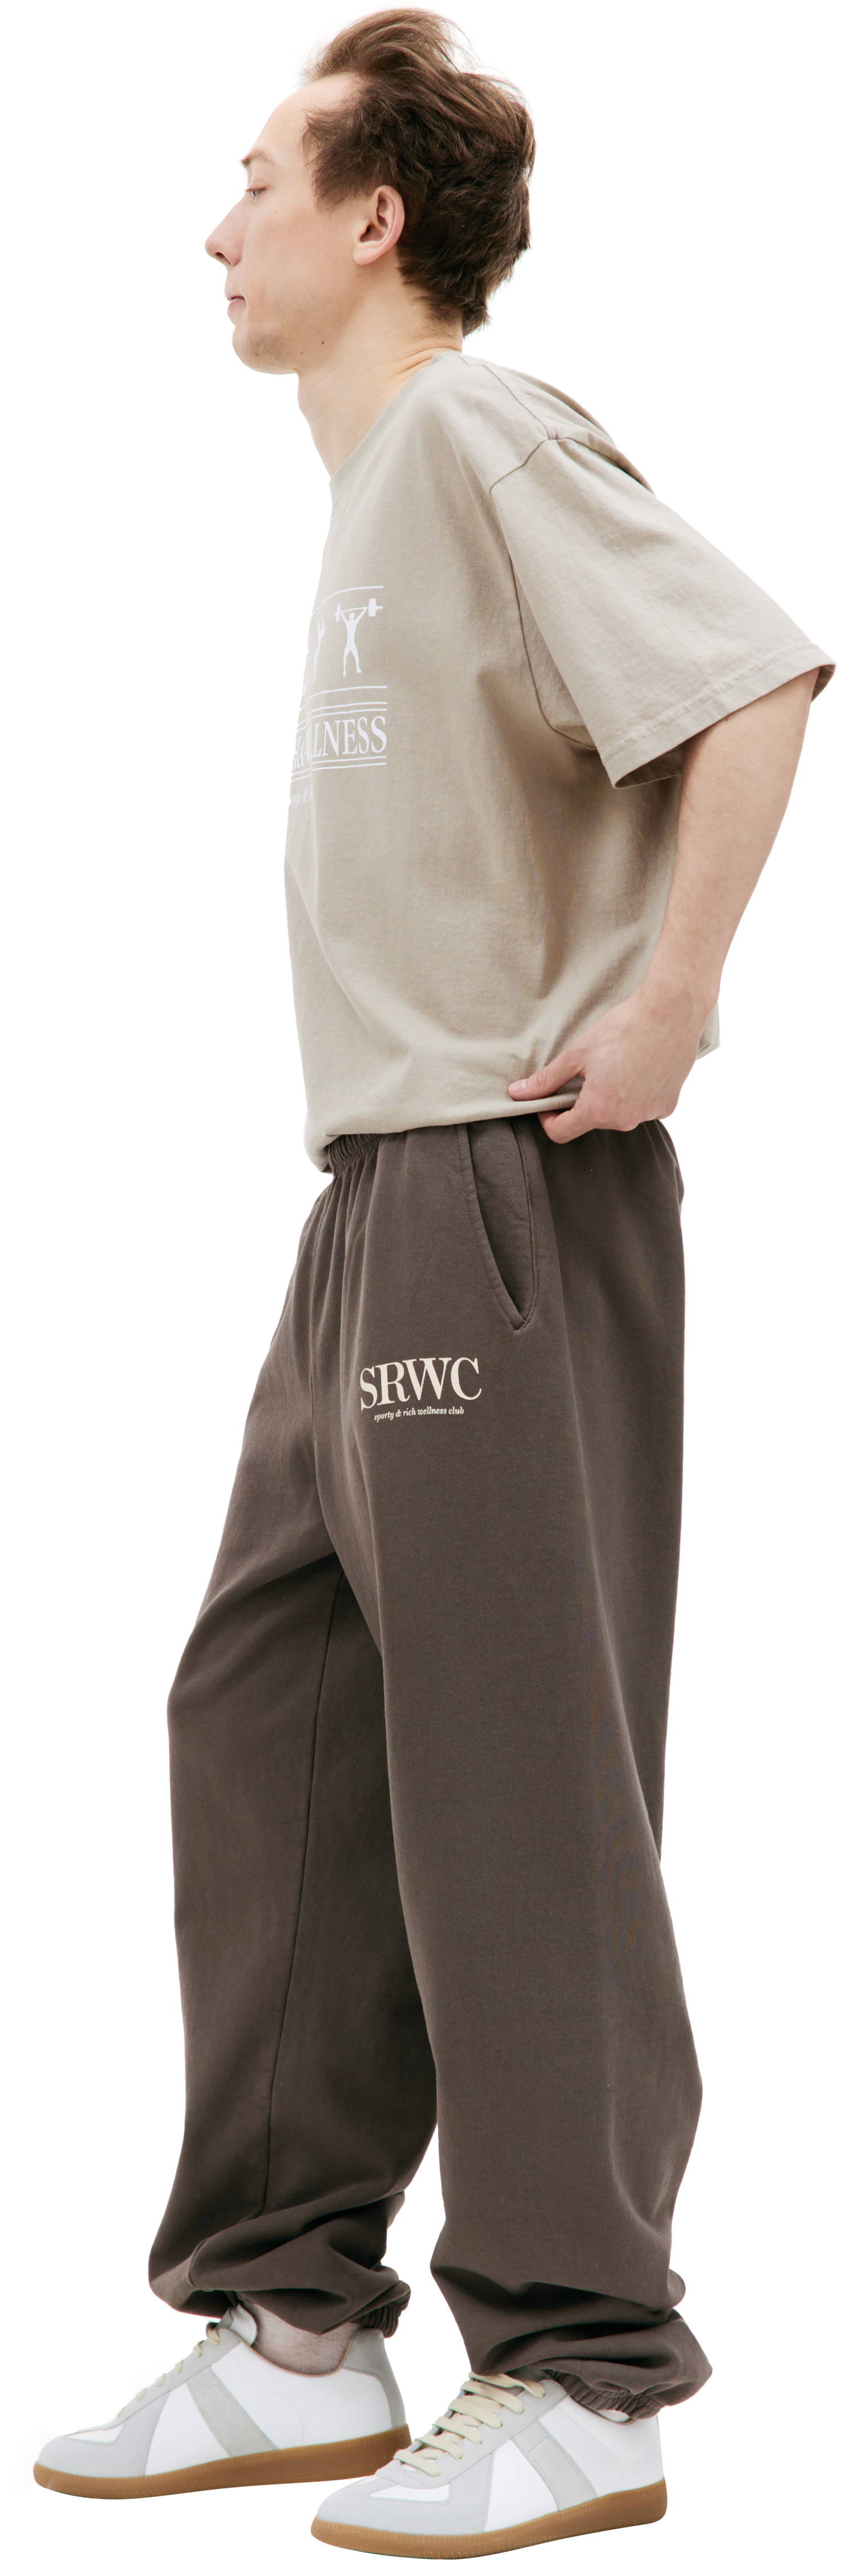 SPORTY & RICH SRWC printed sweatpant